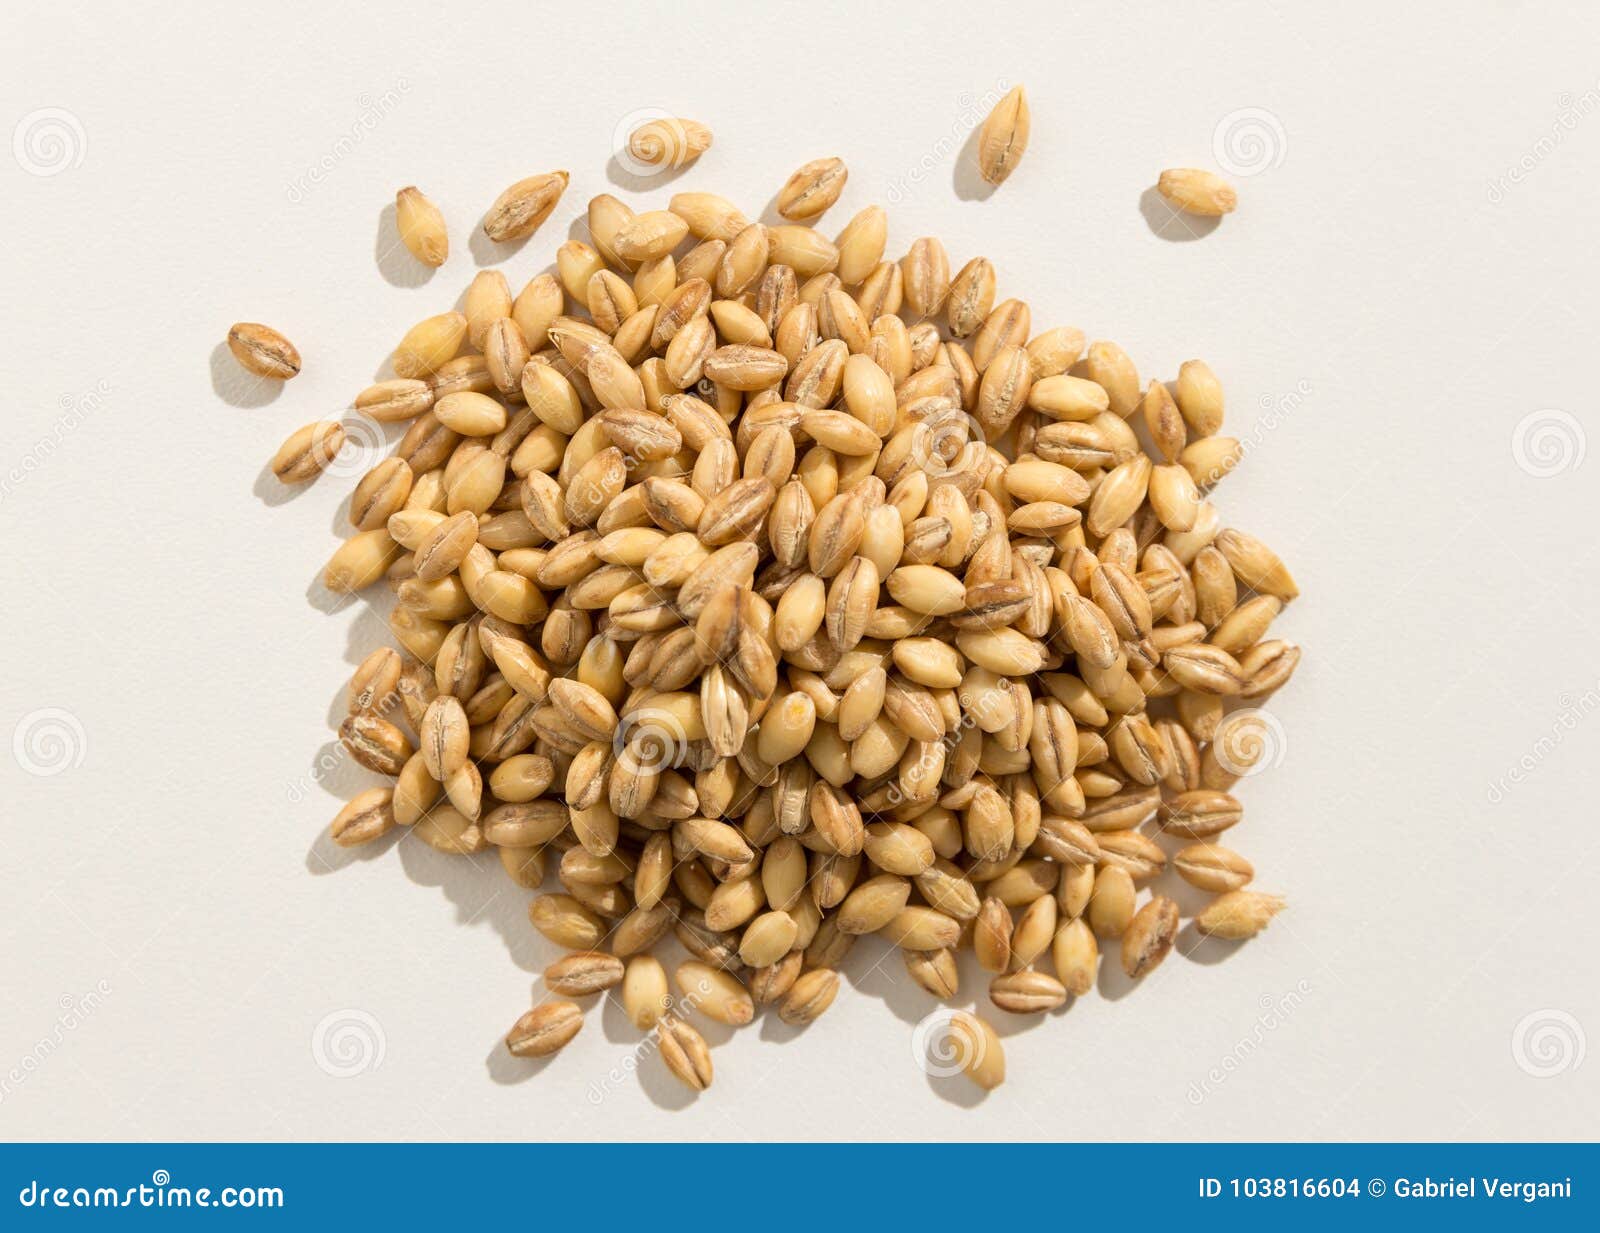 barley cereal grain. pile of grains. top view.